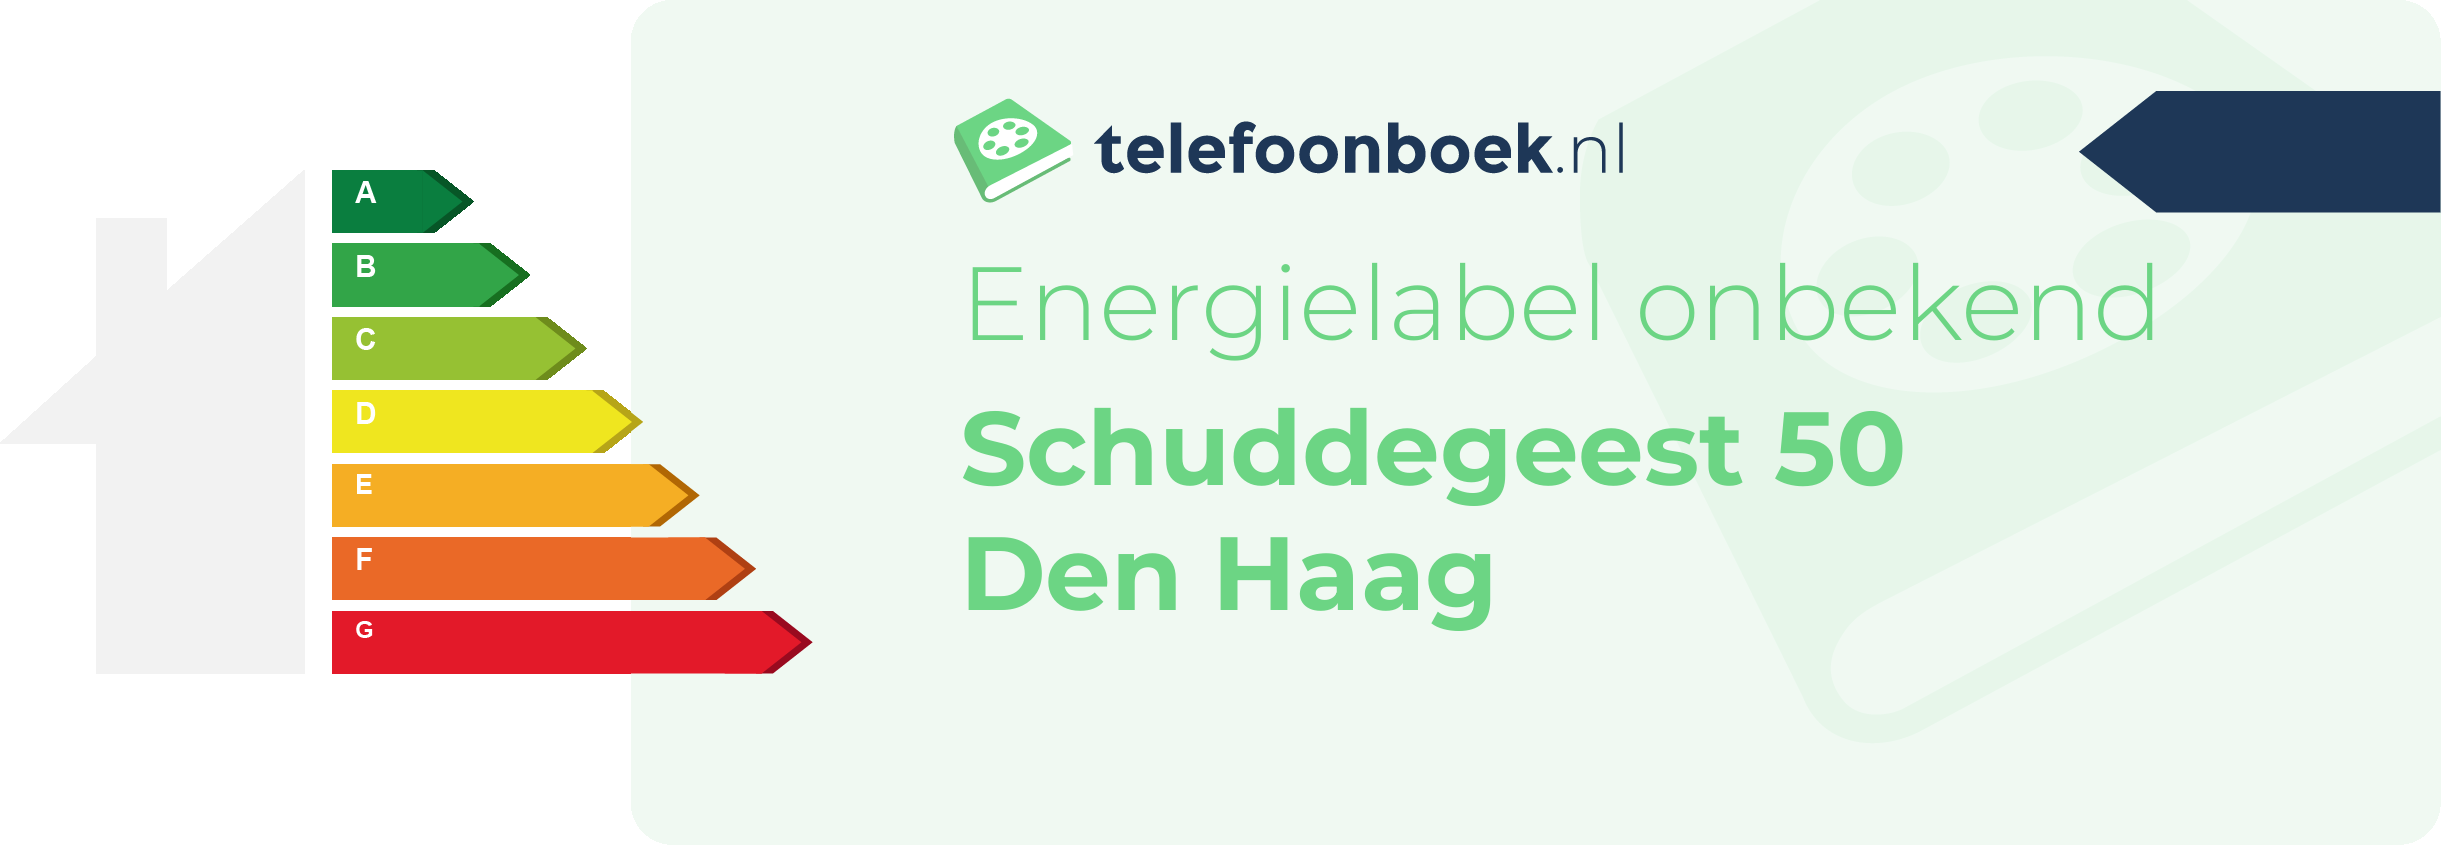 Energielabel Schuddegeest 50 Den Haag